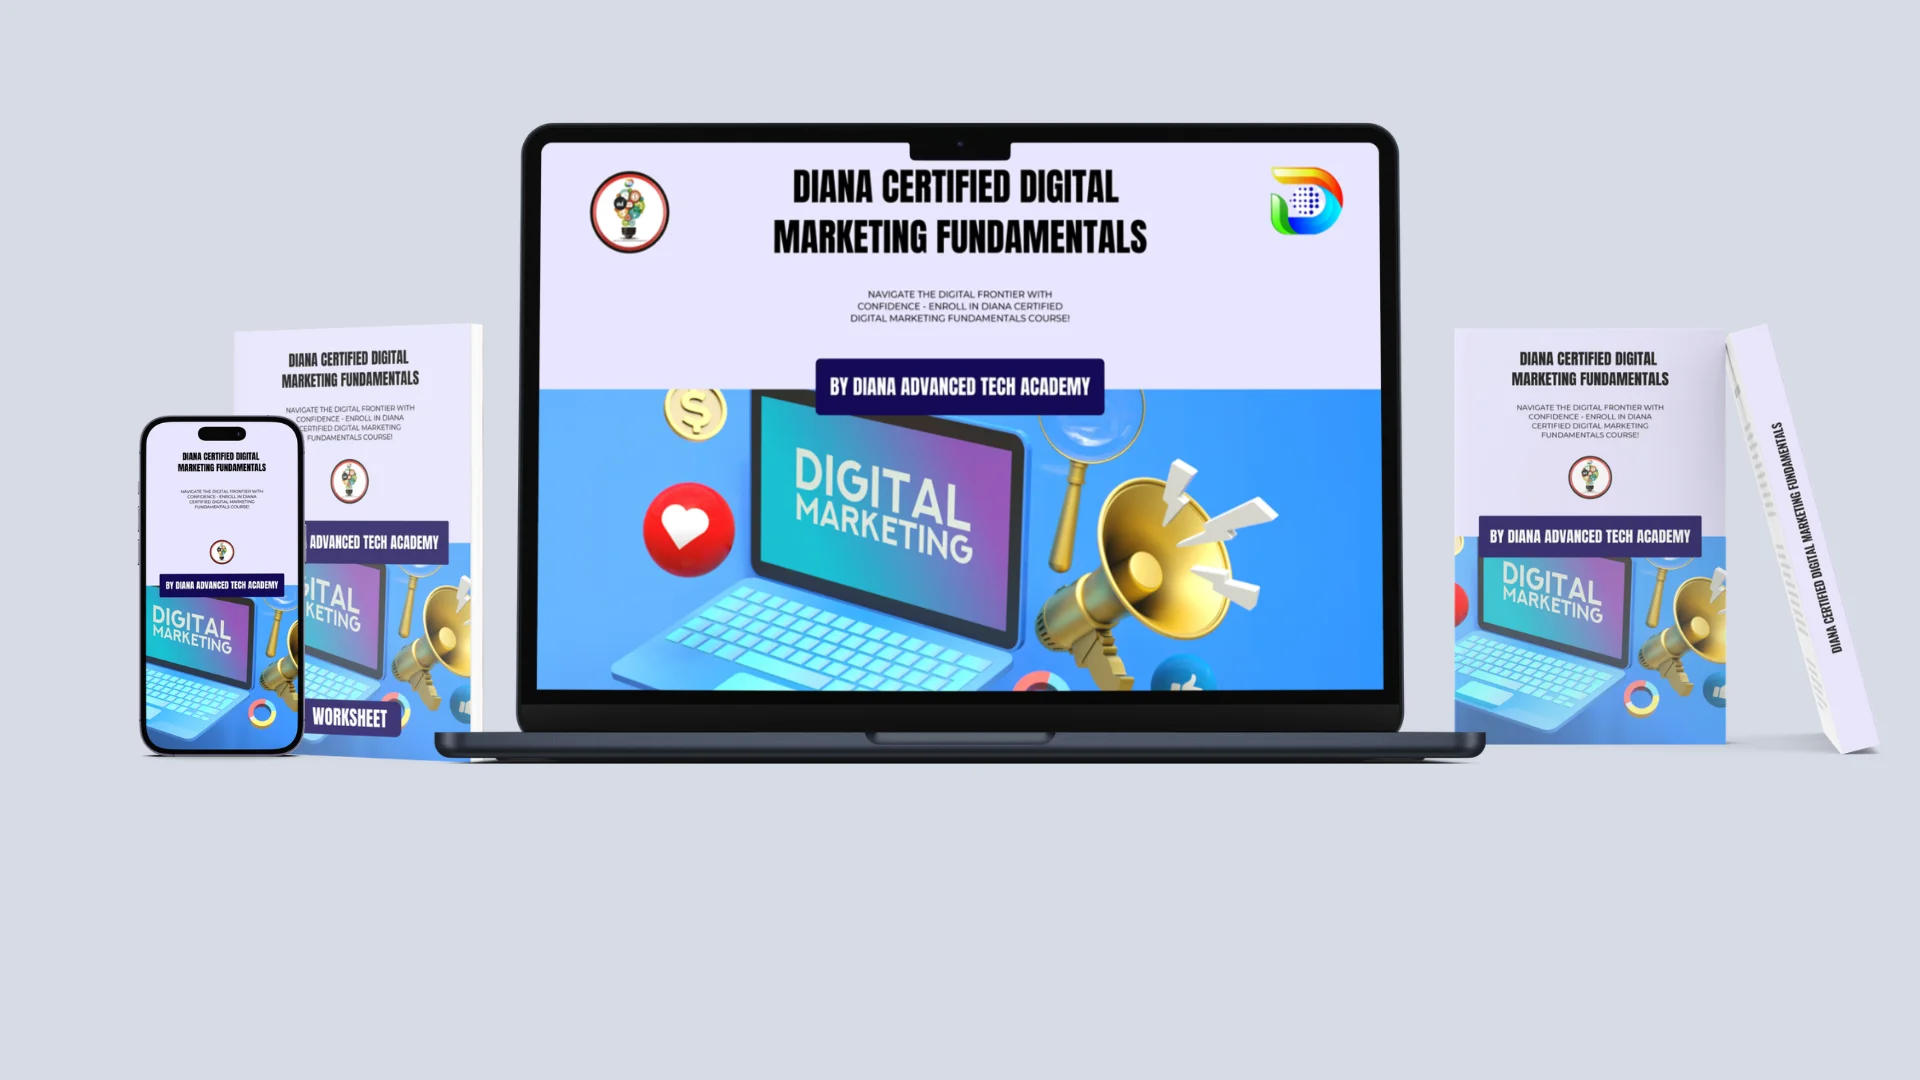 Diana Certified Digital Marketing Fundamentals